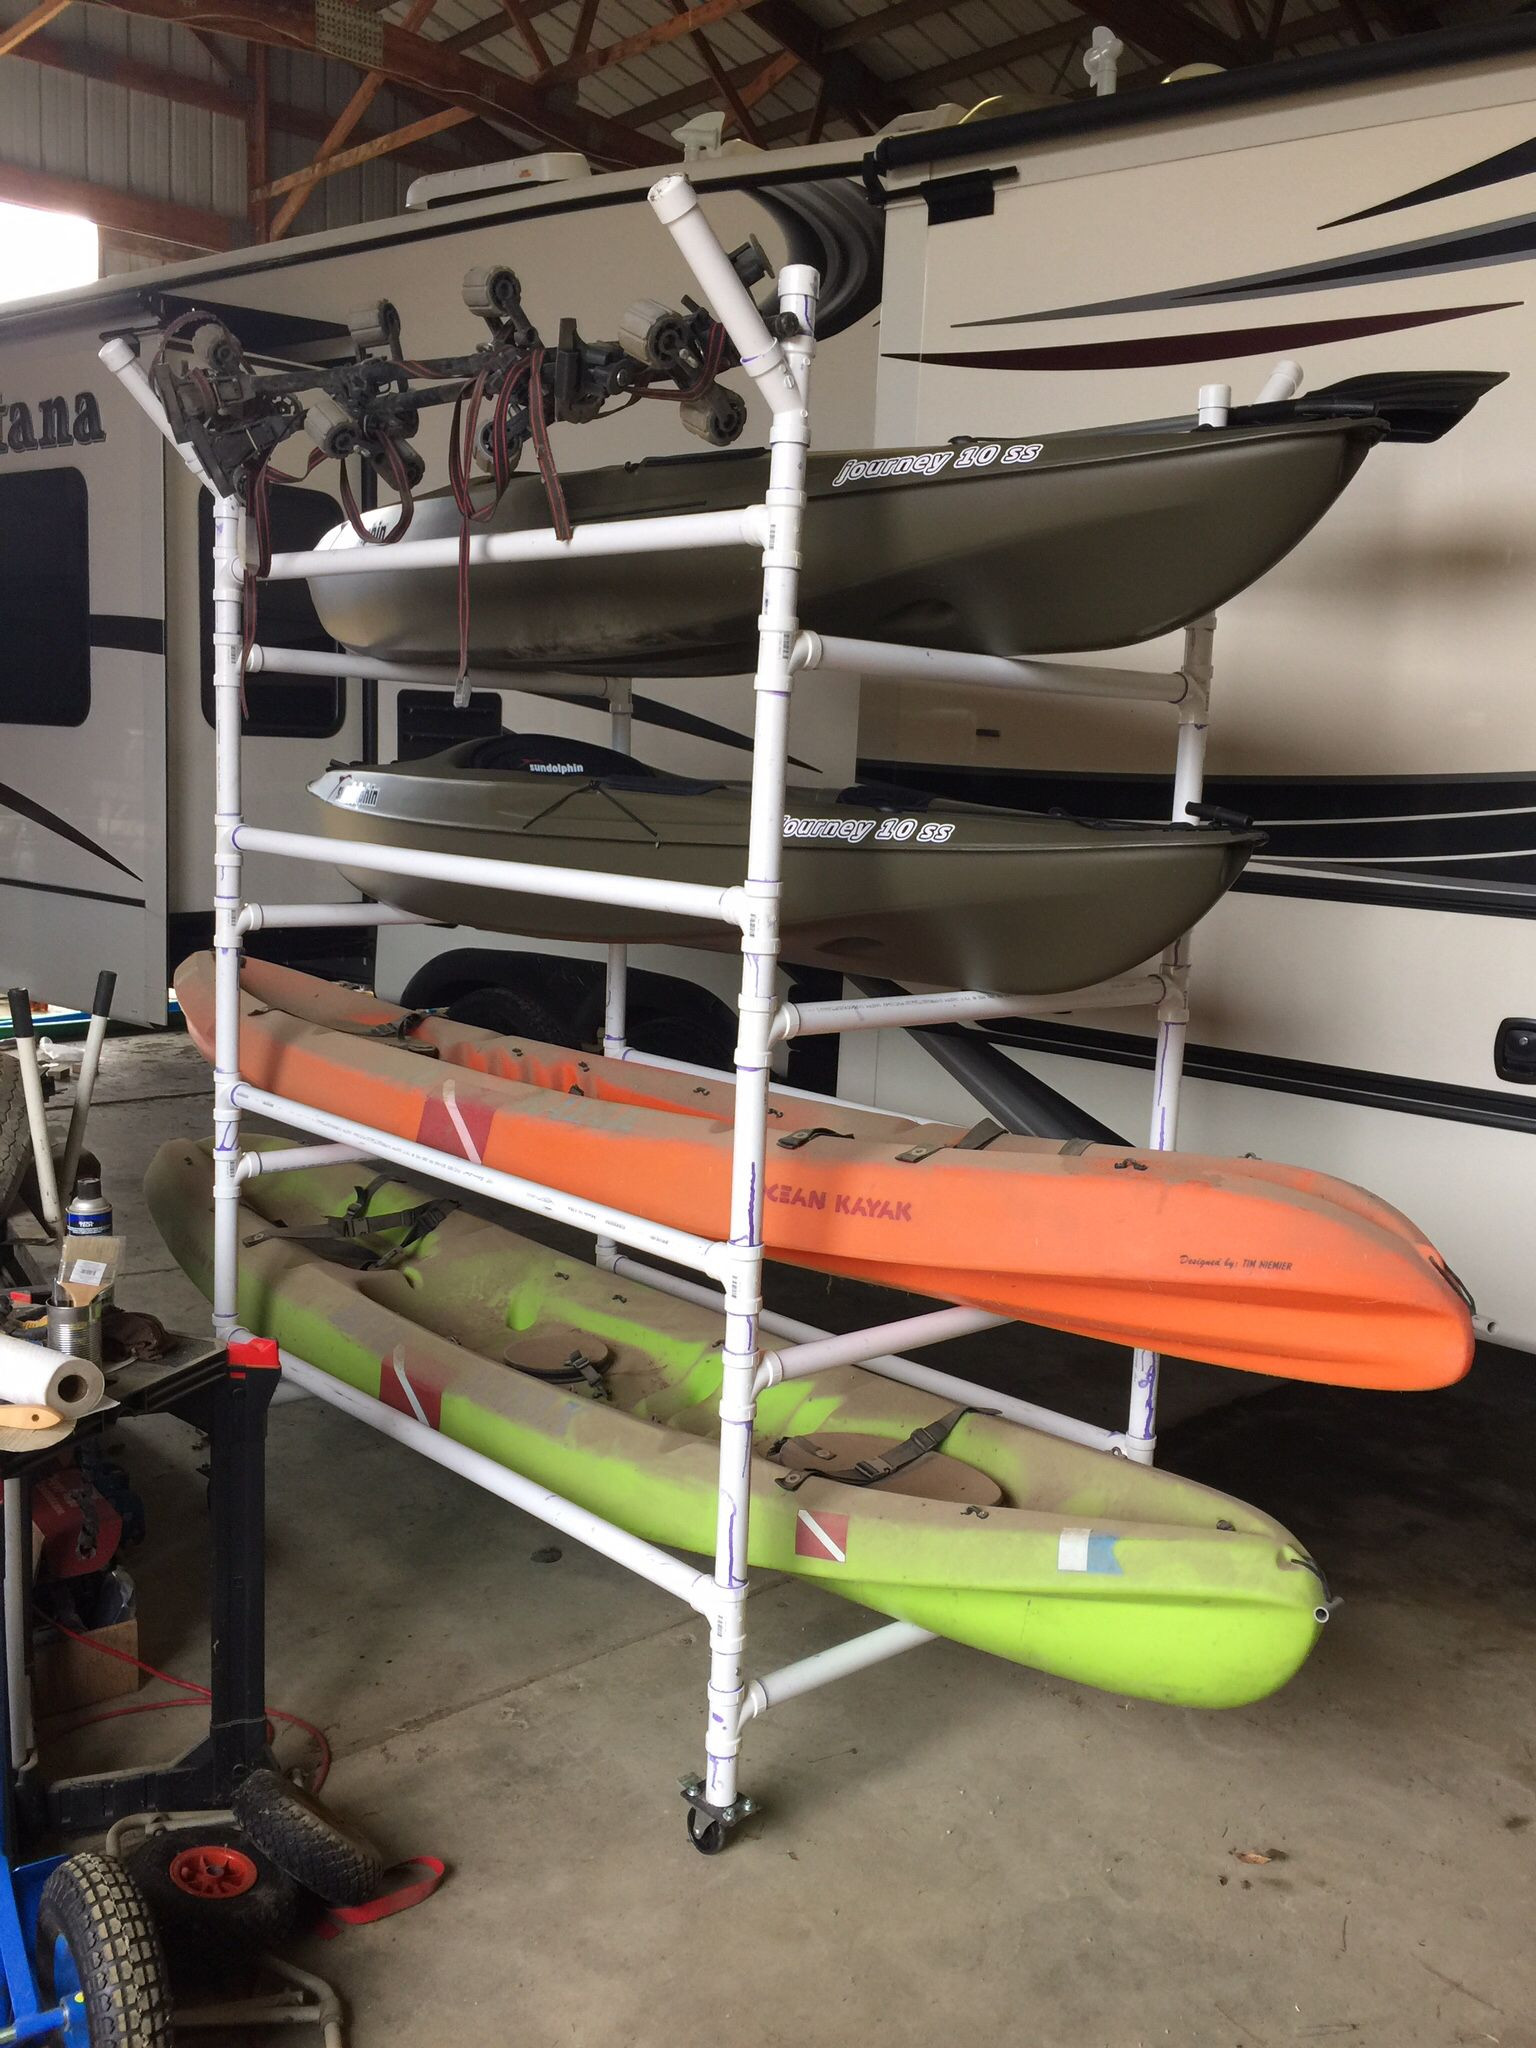 Best ideas about Kayak Rack DIY
. Save or Pin Homemade PVC kayak rack can store 4 kayaks paddles Now.